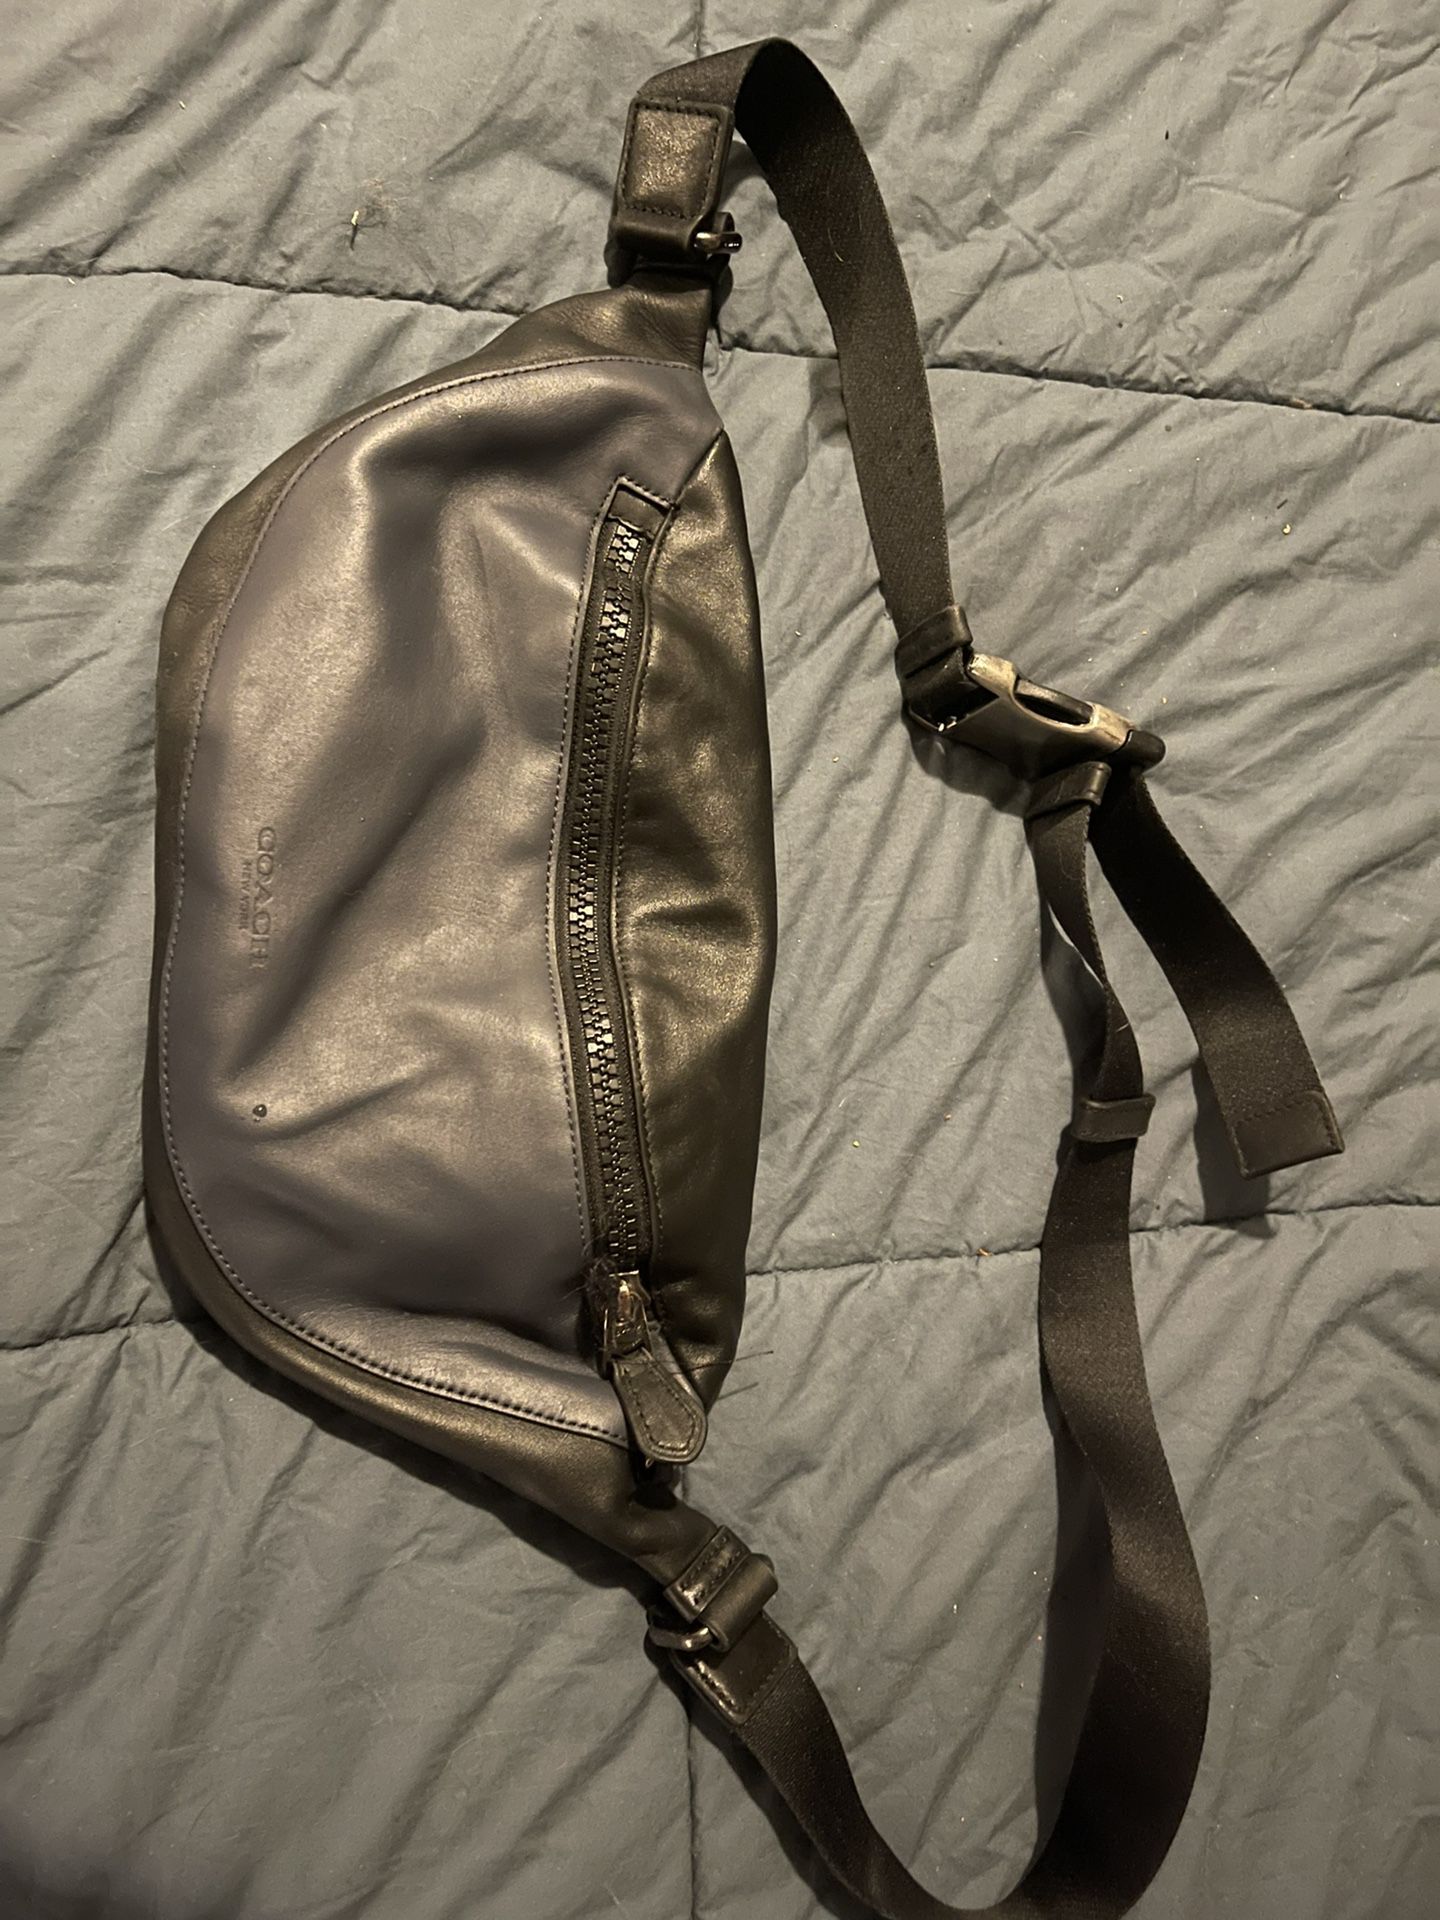 Coach (real)  leather waist  bag $80